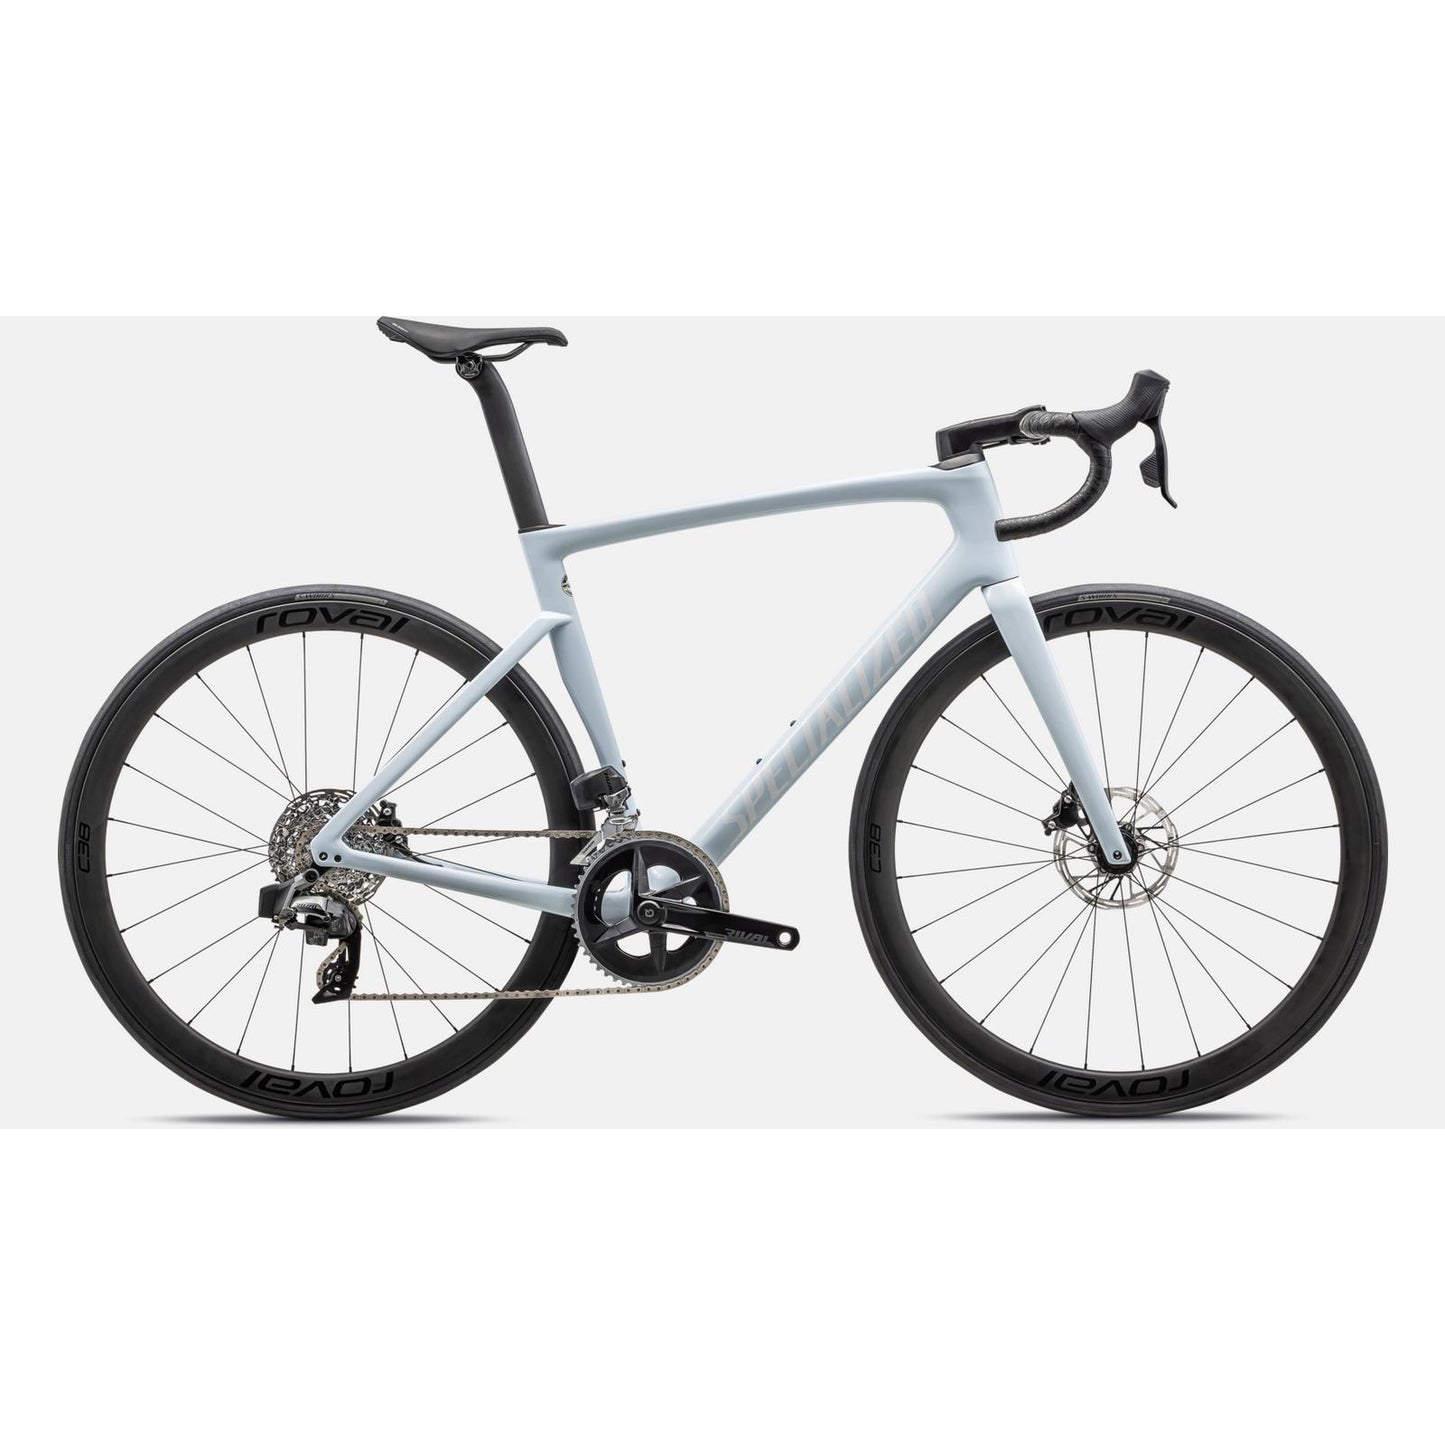 Specialized Tarmac SL7 Expert Road Bike - Bikes - Bicycle Warehouse